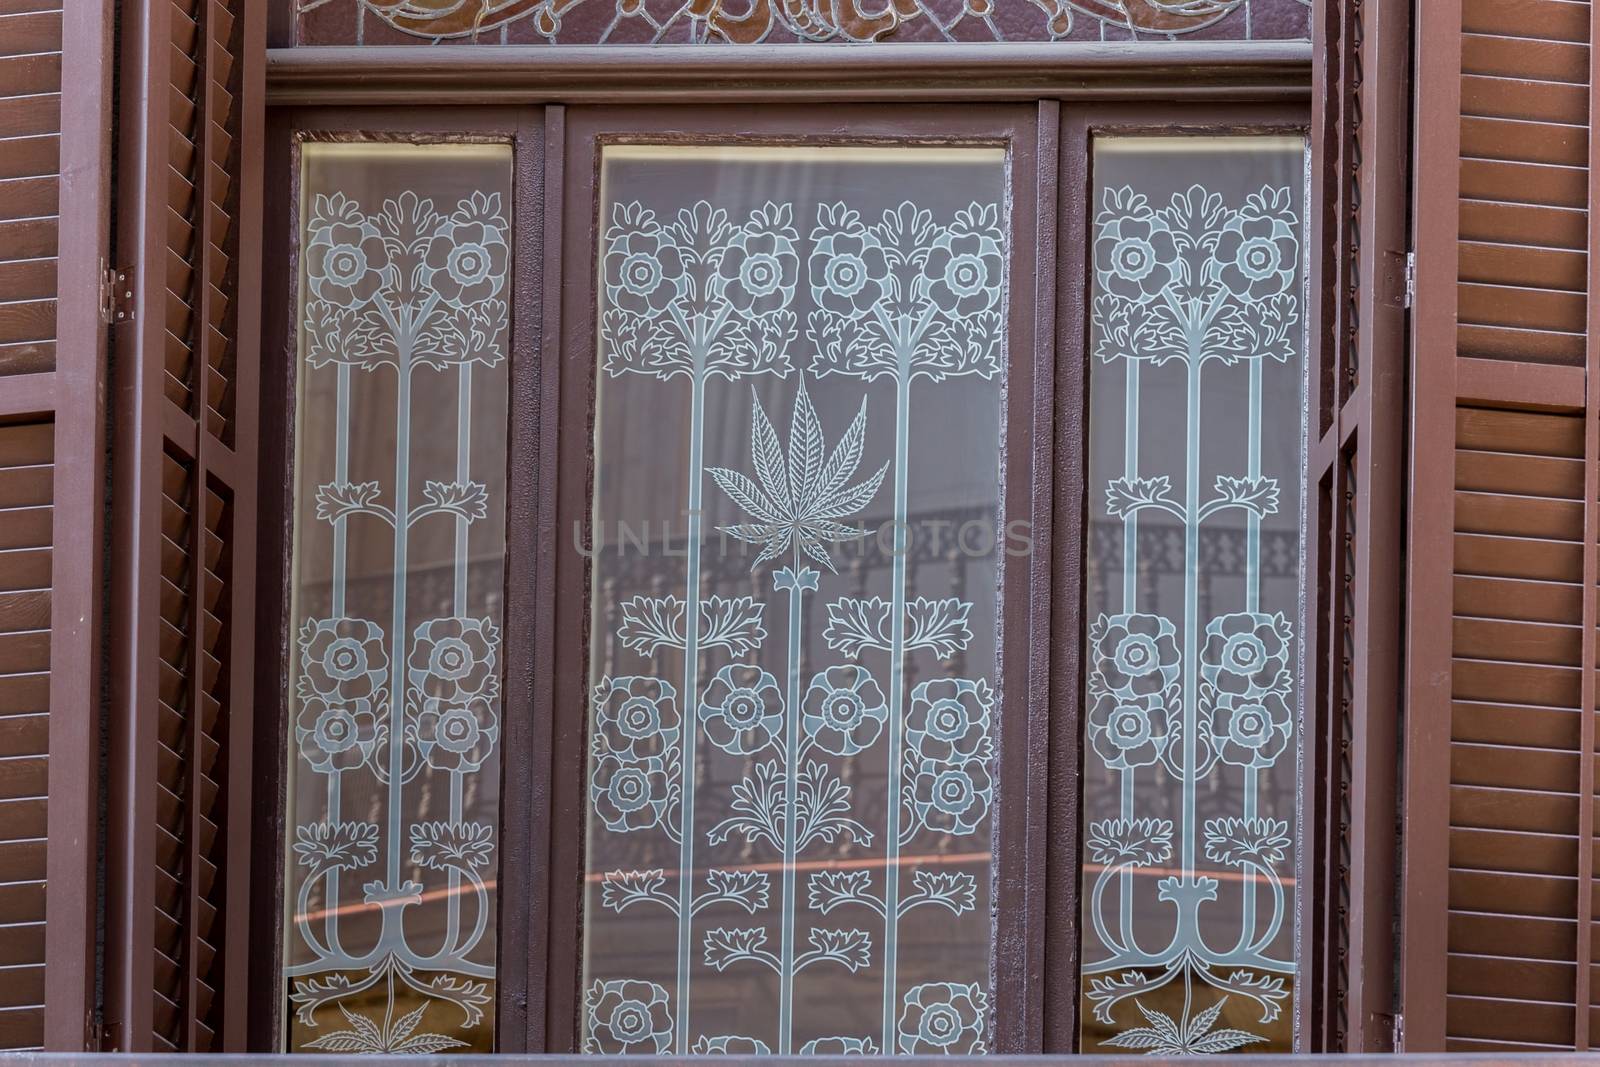 Palau Mornau, Hash Marihuana and Hemp Museum, Barcelona, Ciutat Vella, Spain by Digoarpi